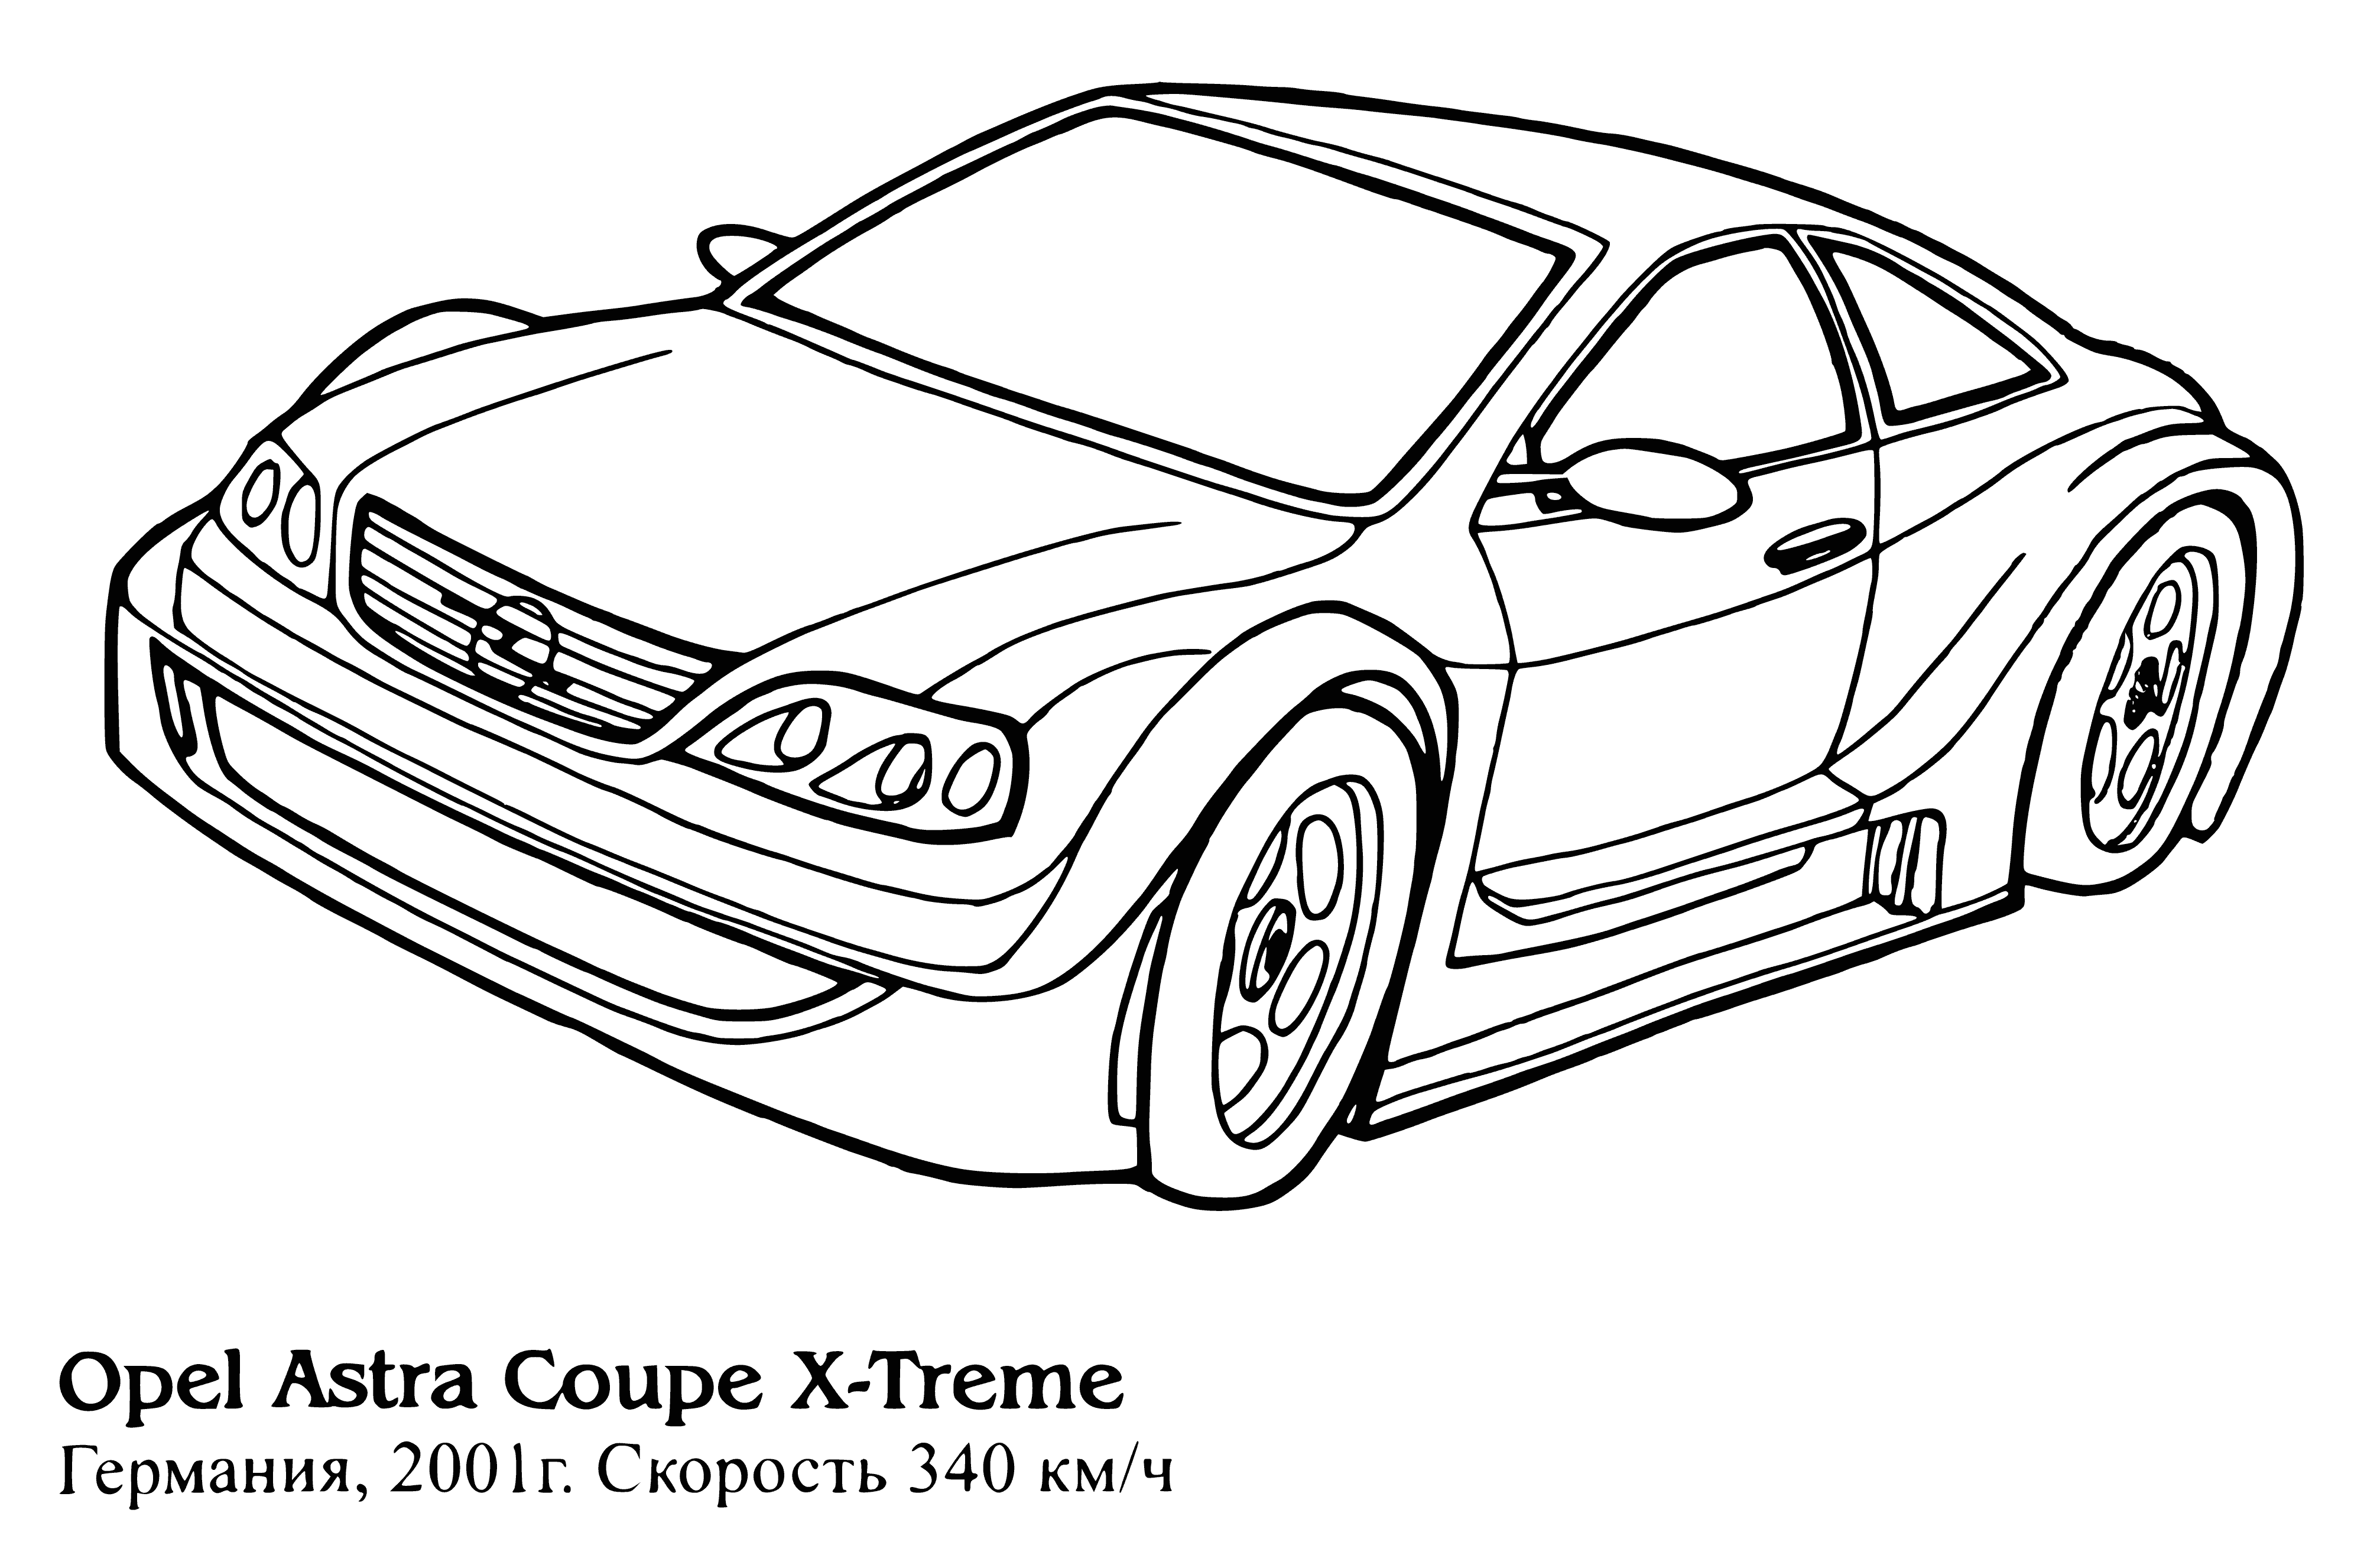 Opel Astra Coupé X-Treme coloriage